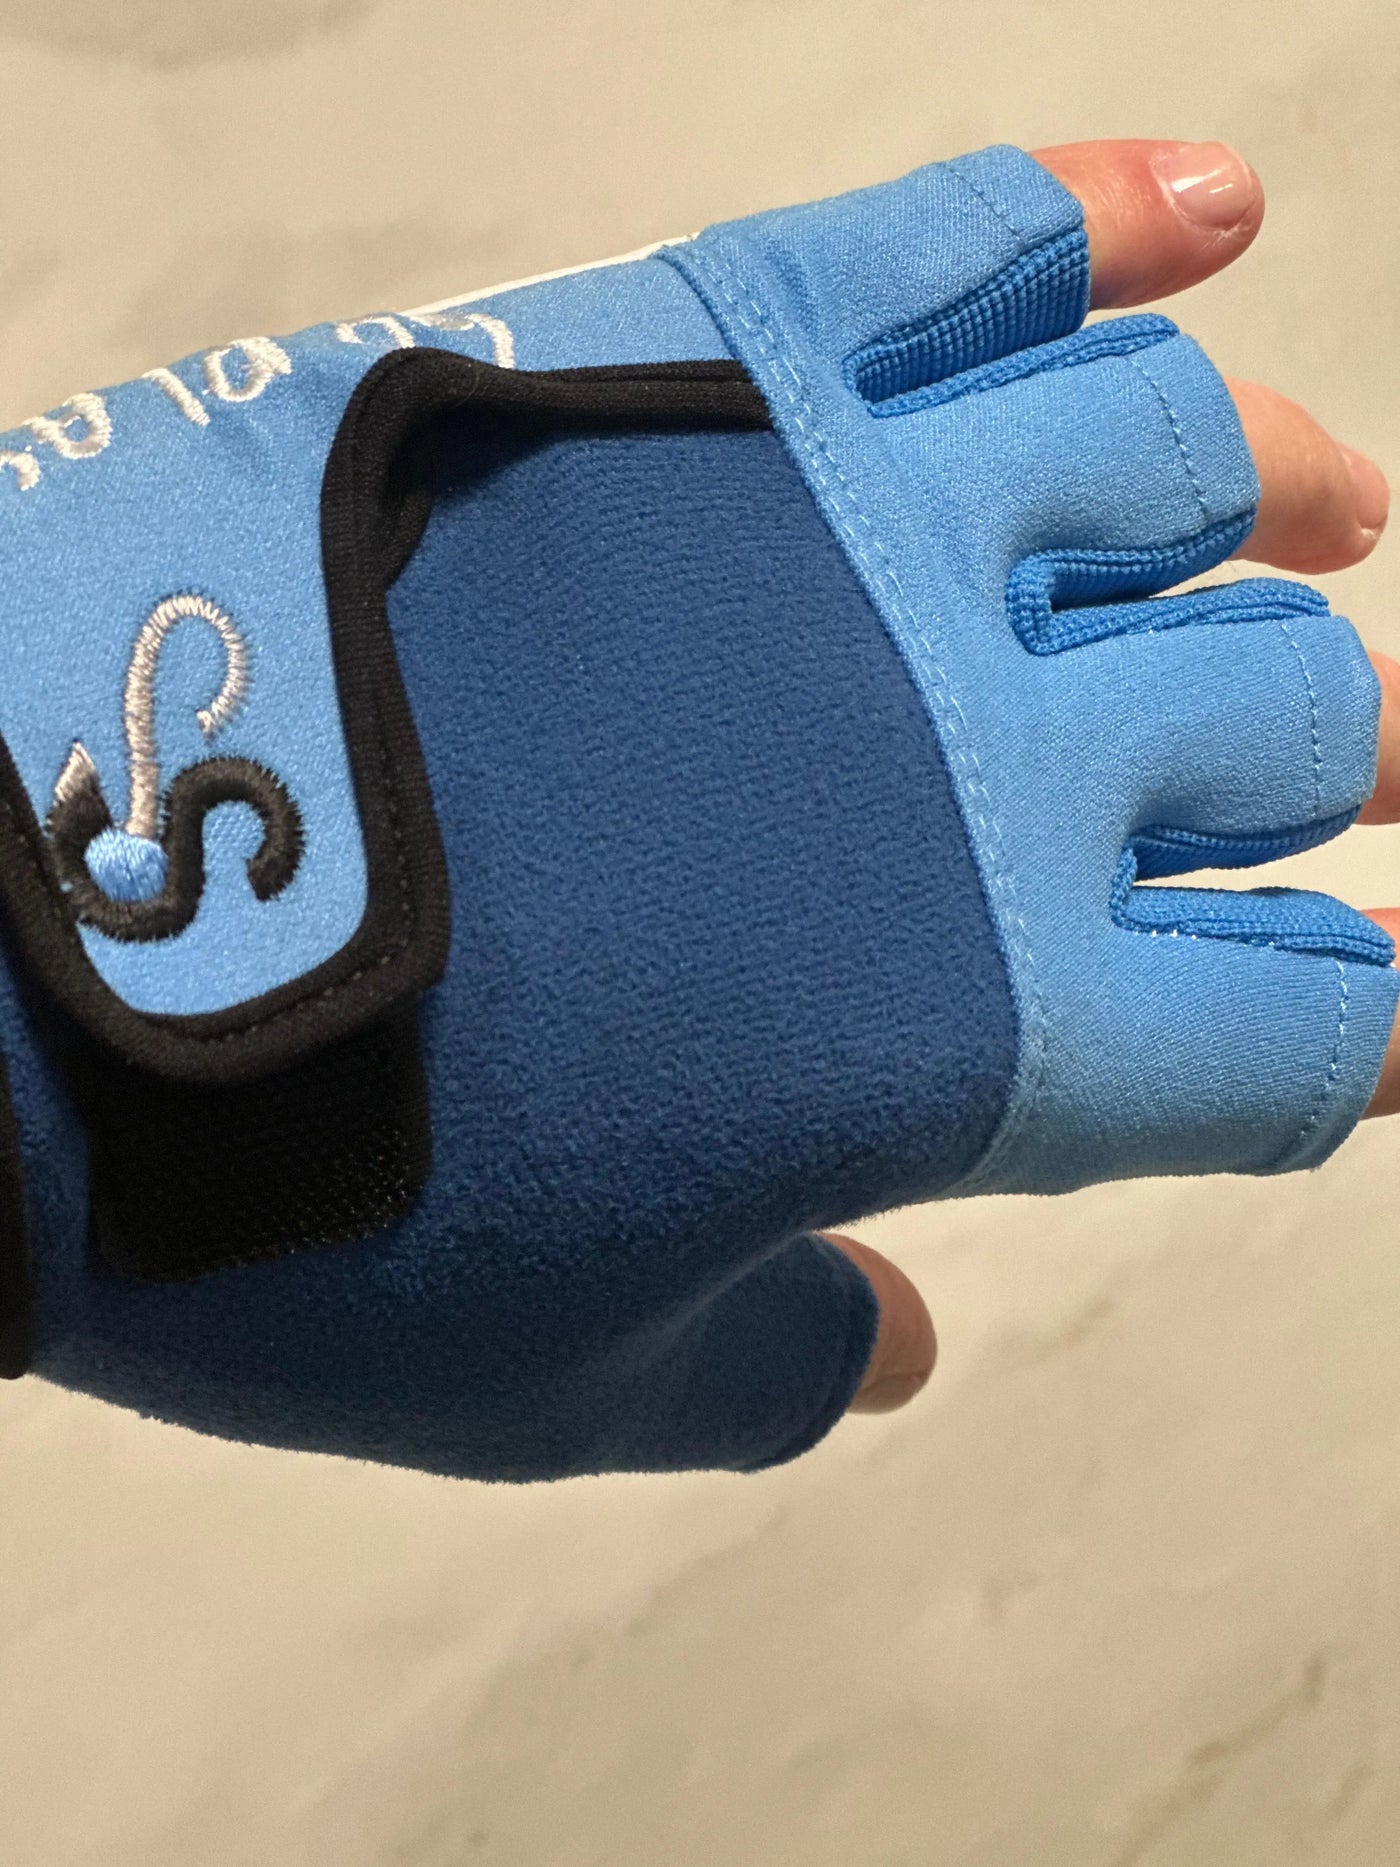 KOTC Pro Gloves Blue Unpadded Palms - Half Fingers